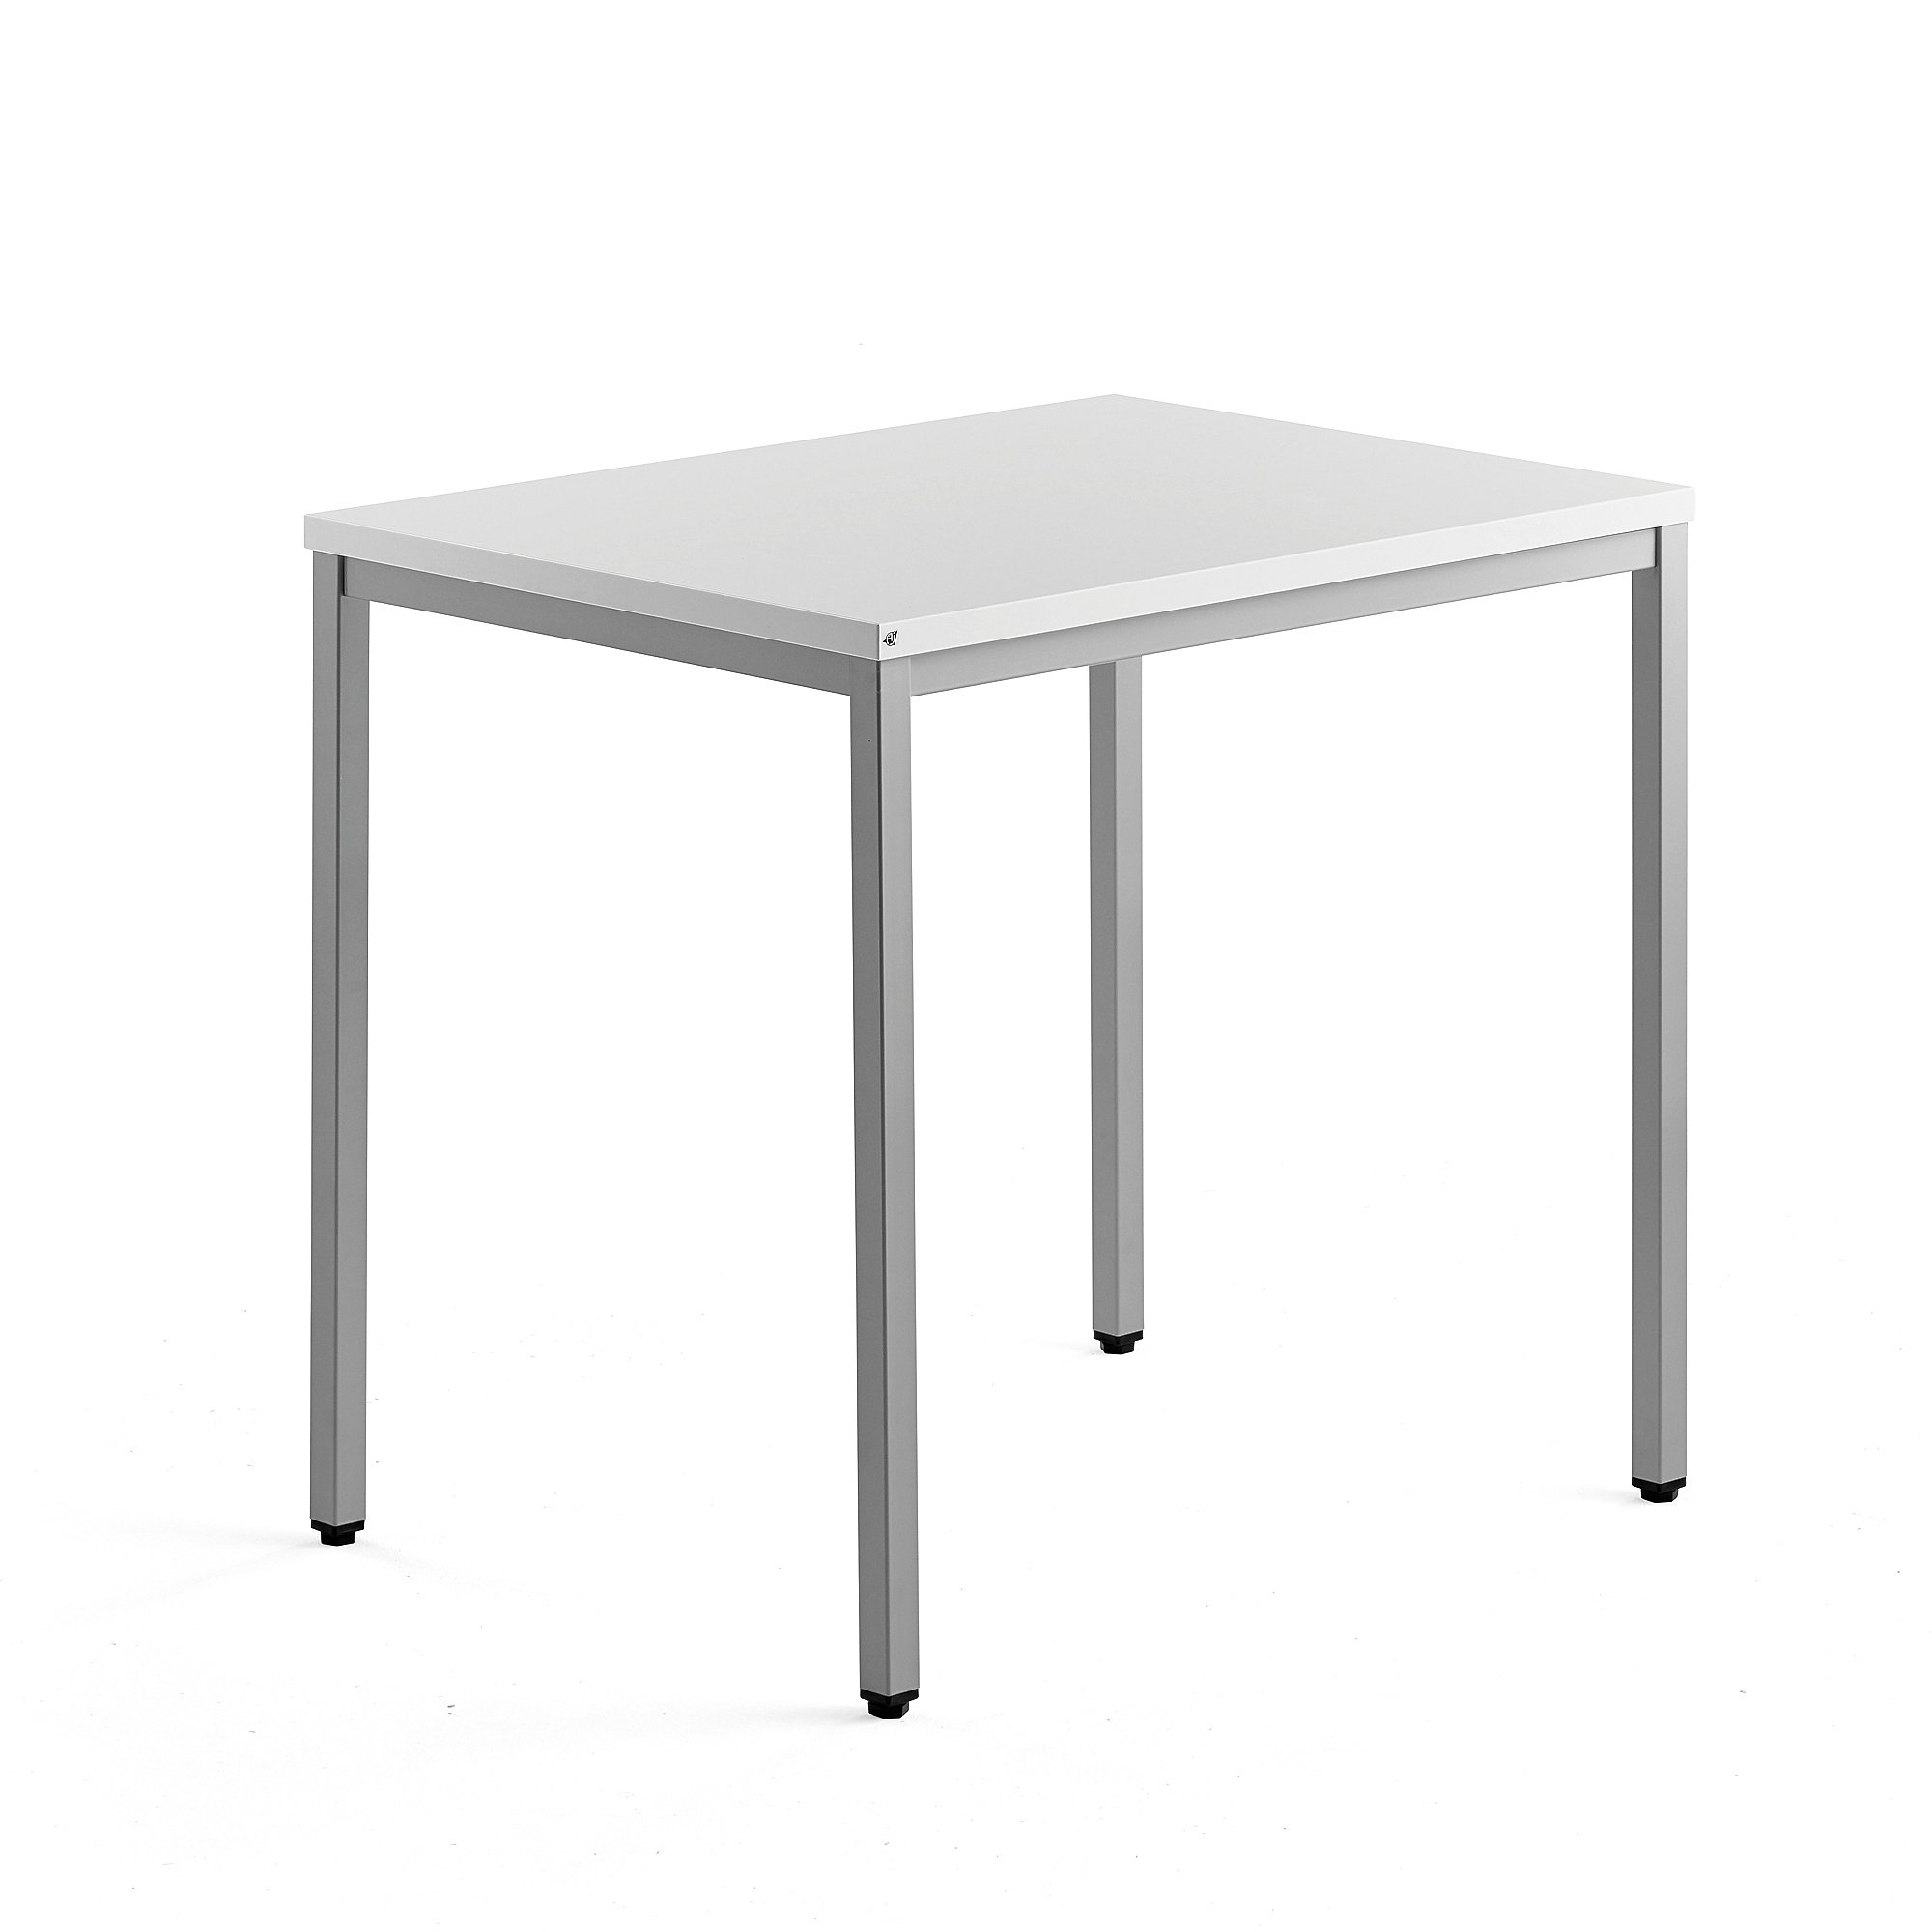 Přídavný stůl QBUS, 4 nohy, 800x600 mm, stříbrný rám, bílá